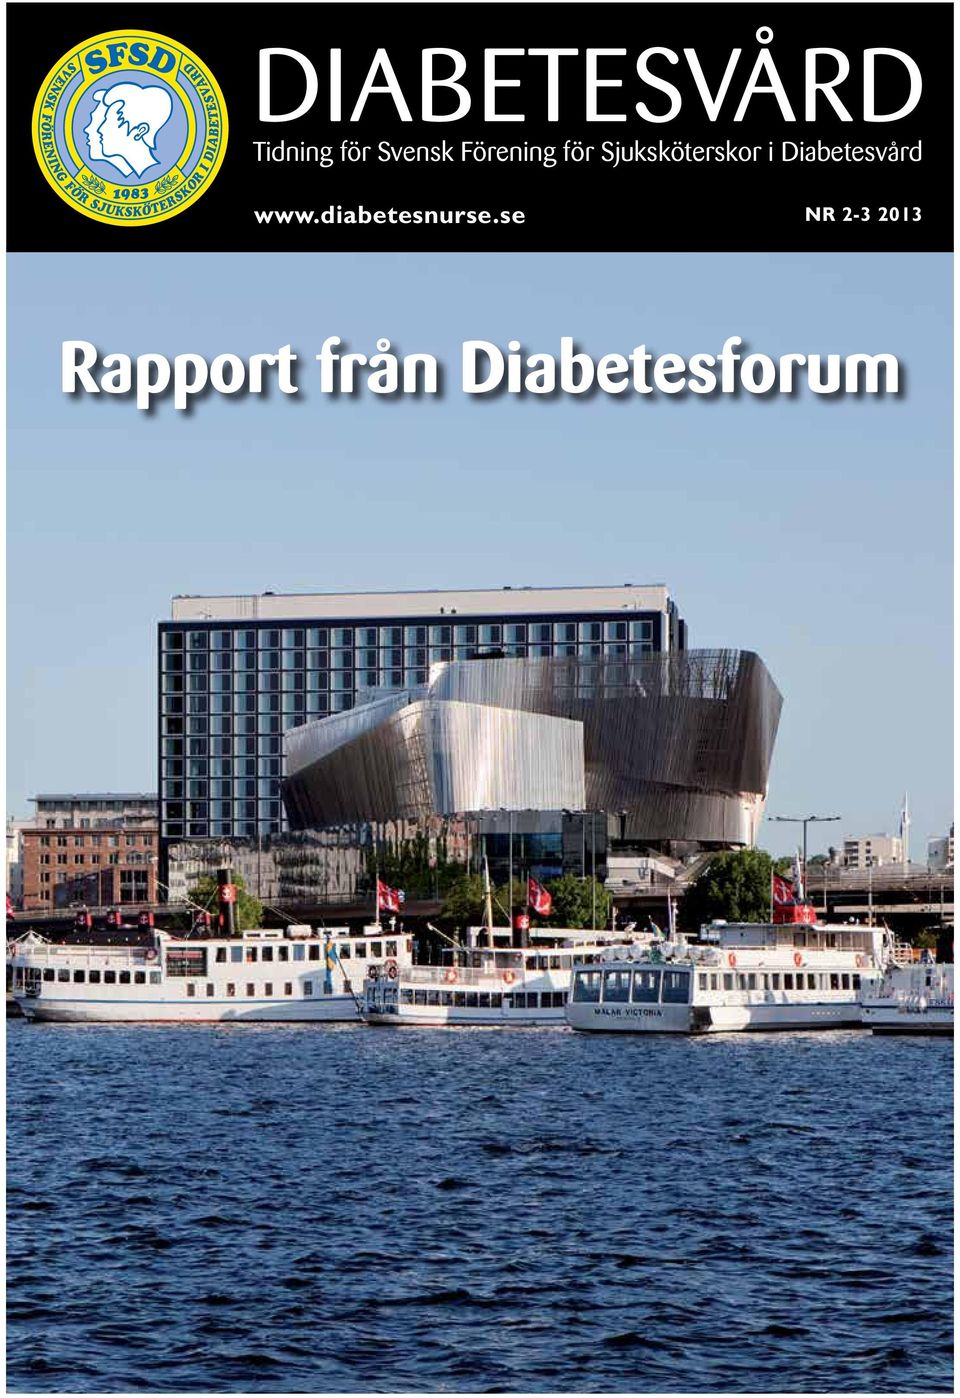 Diabetesvård www.diabetesnurse.